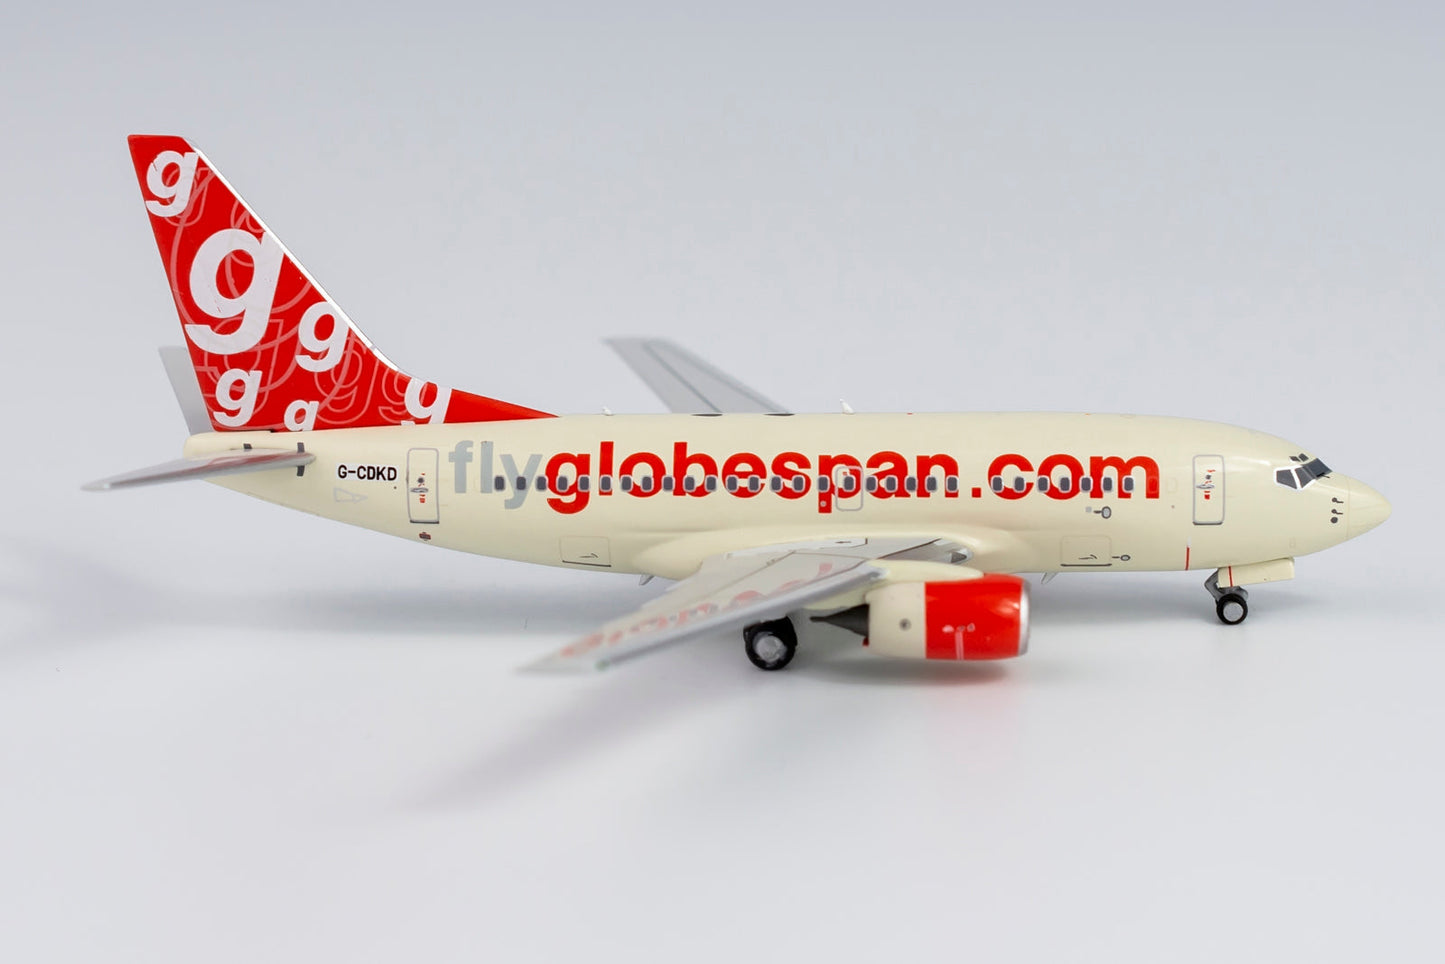 *1/400 Flyglobespan B 737-600 "Scandinavian - SAS Hybrid Livery" NG Models 76001